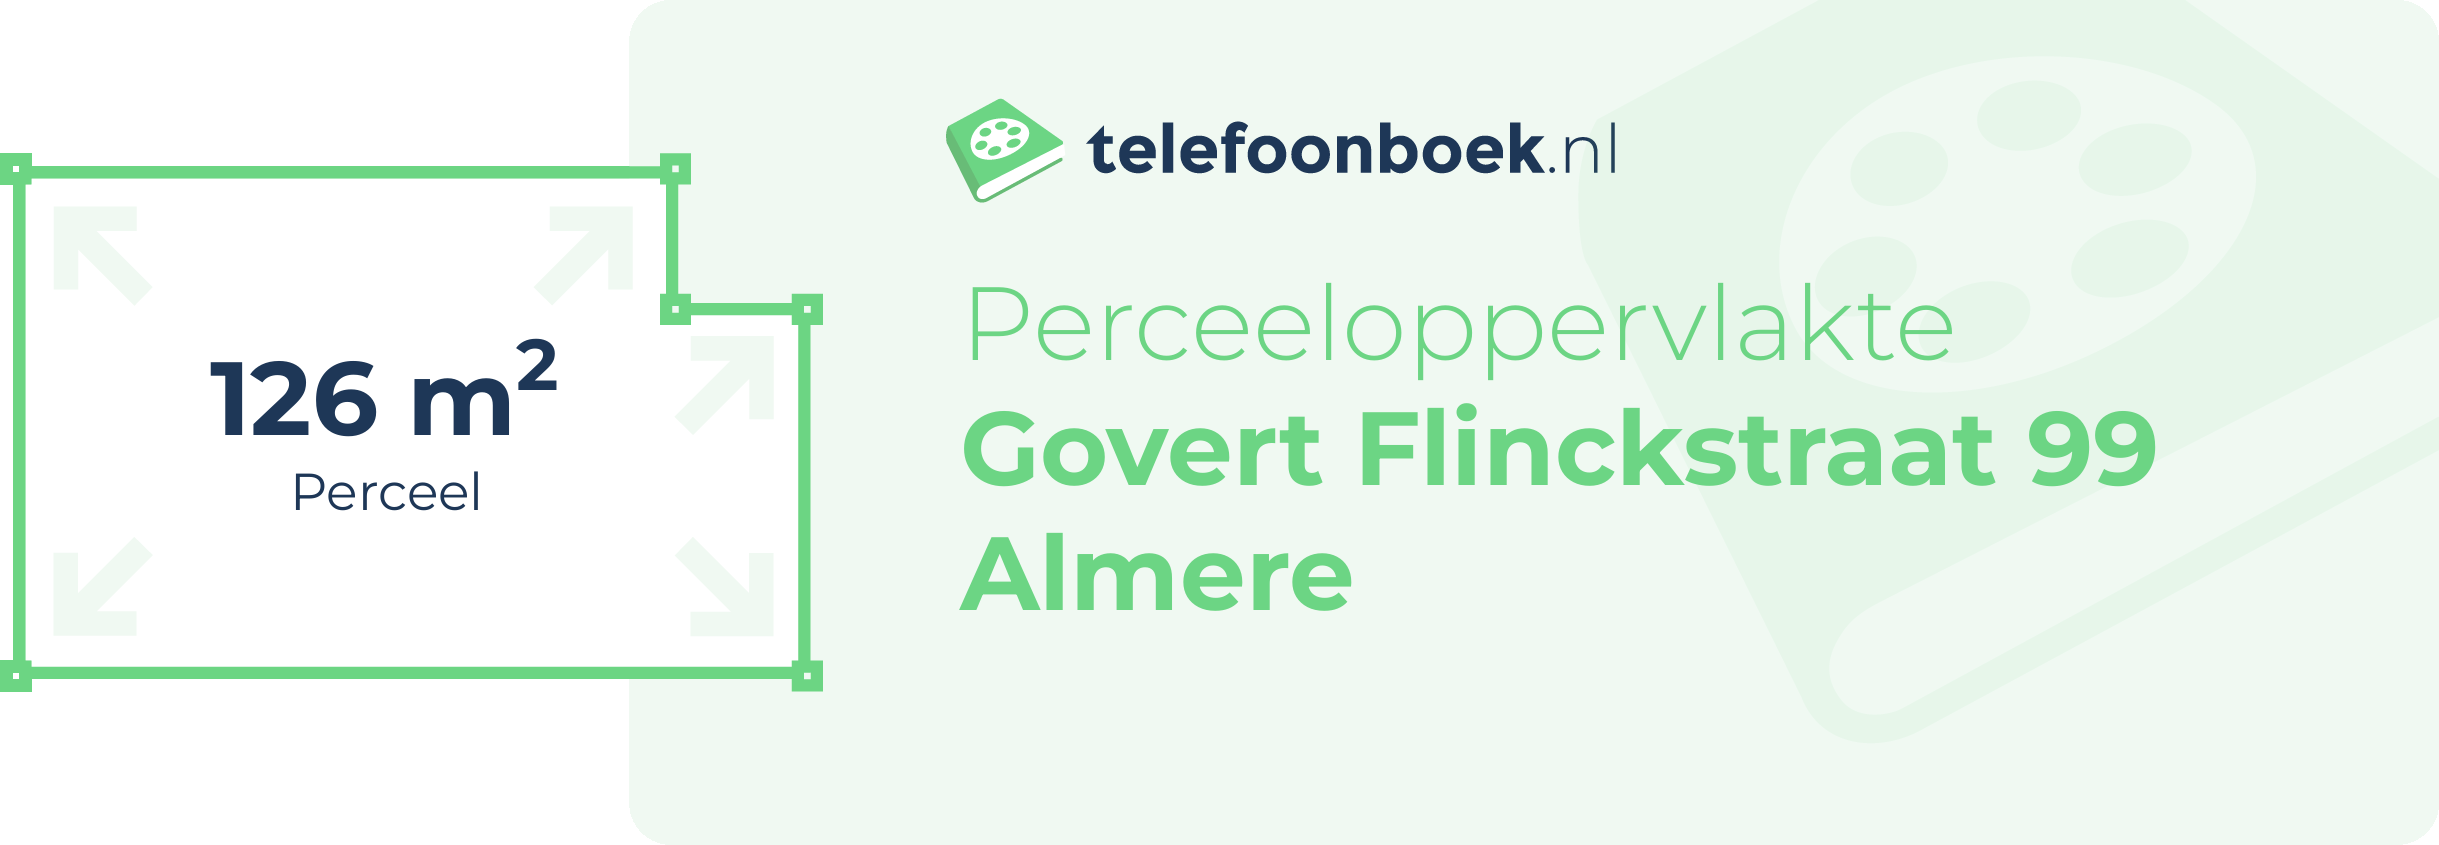 Perceeloppervlakte Govert Flinckstraat 99 Almere